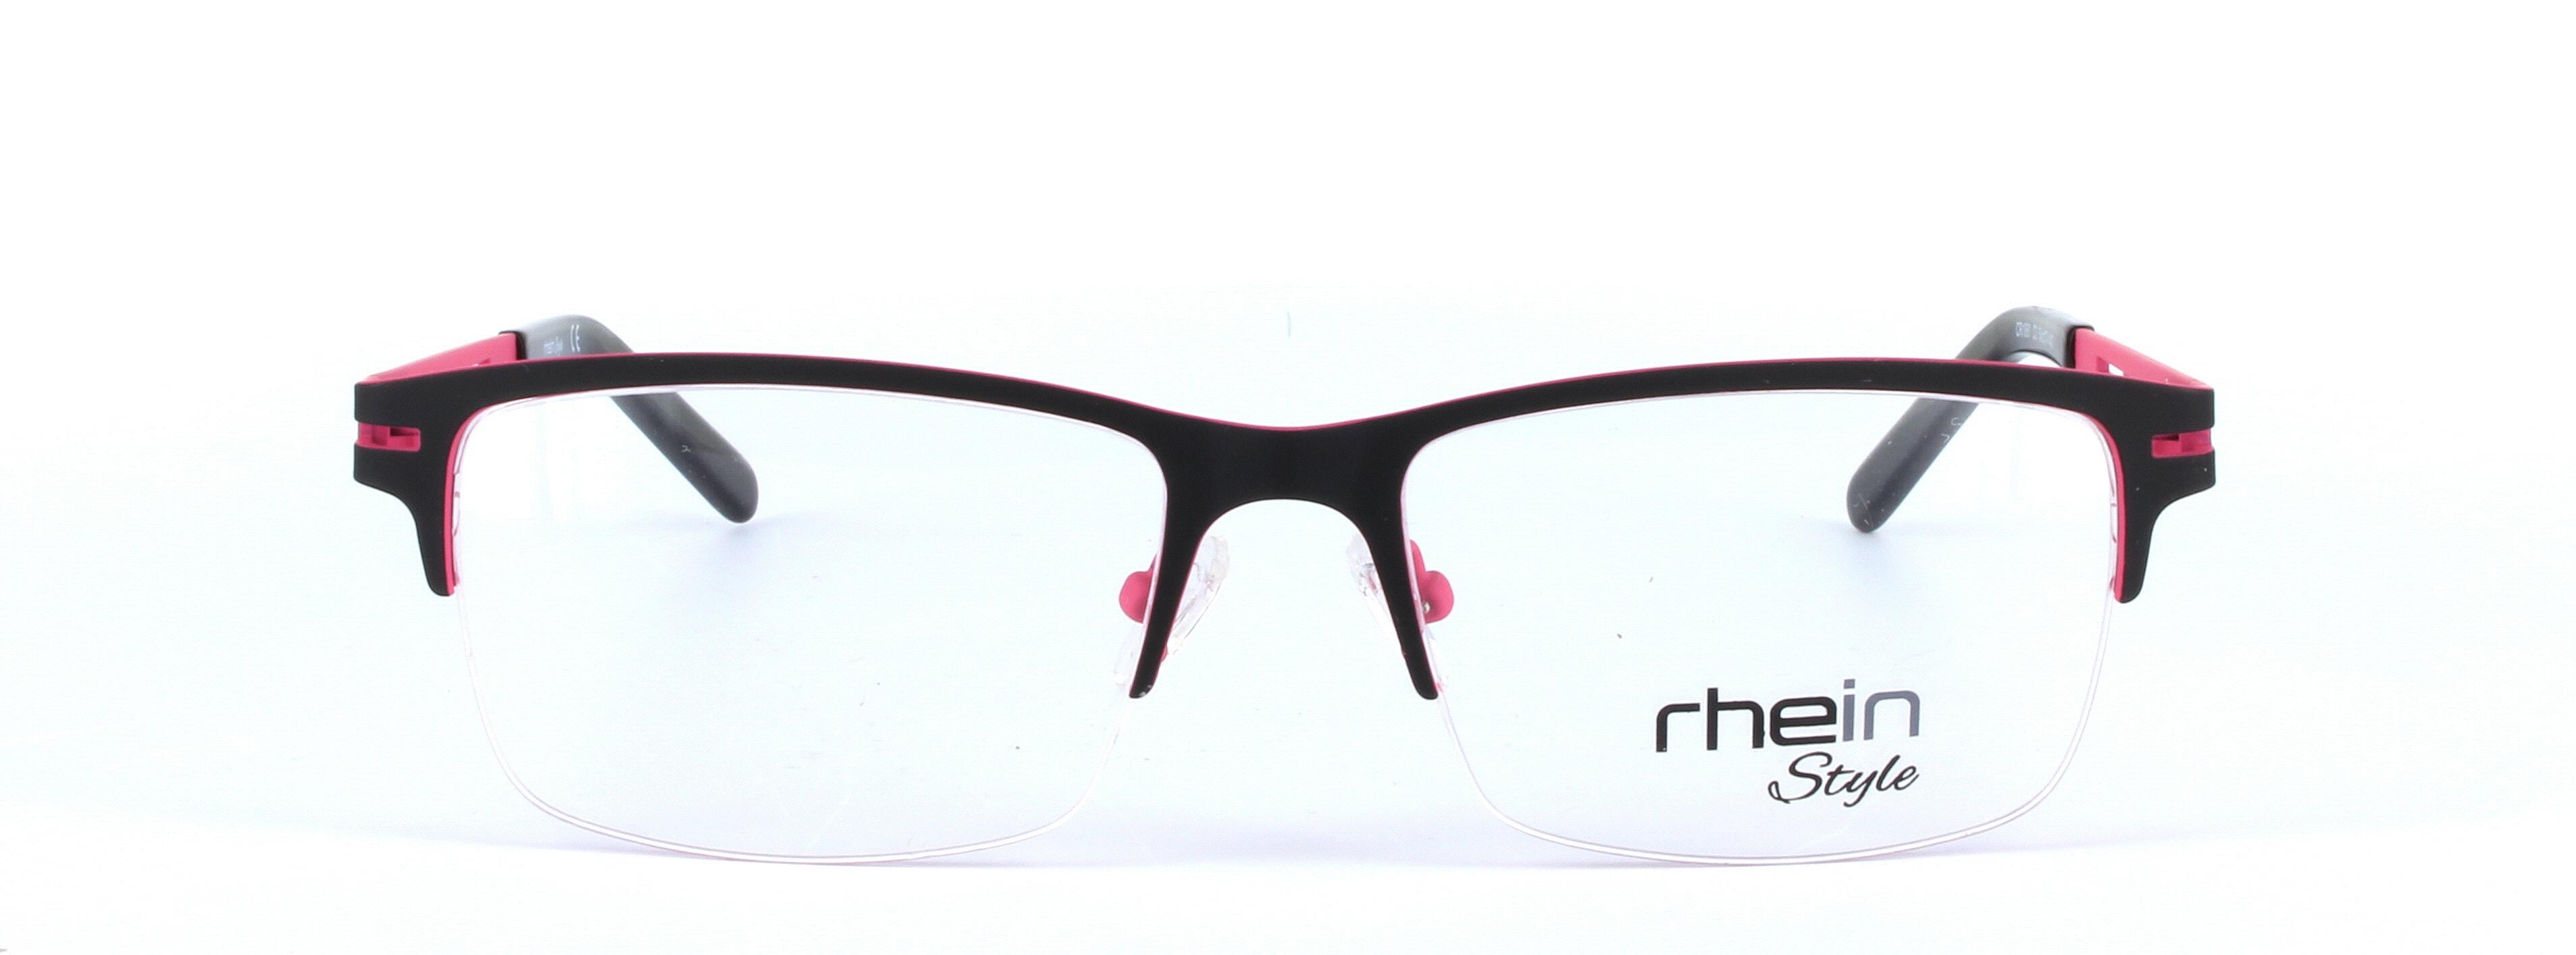 Curtis Black and Pink Semi Rimless Rectangular Metal Glasses - image View 5